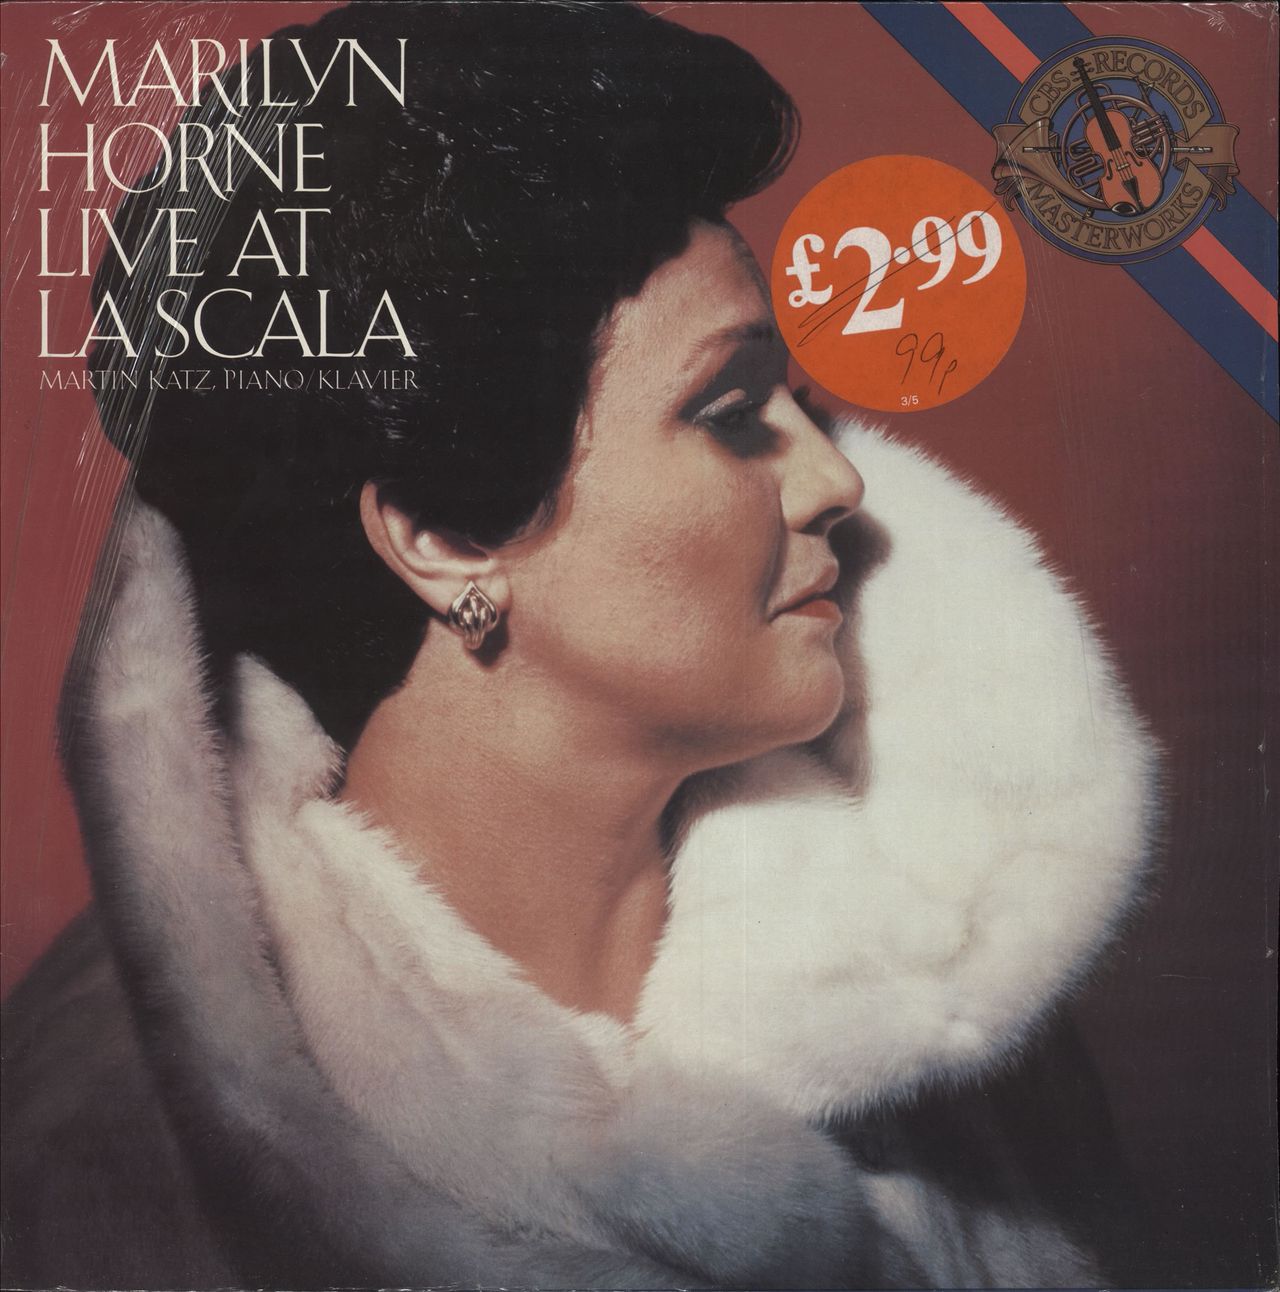 Marilyn Horne Live At La Scala UK vinyl LP album (LP record) 74105